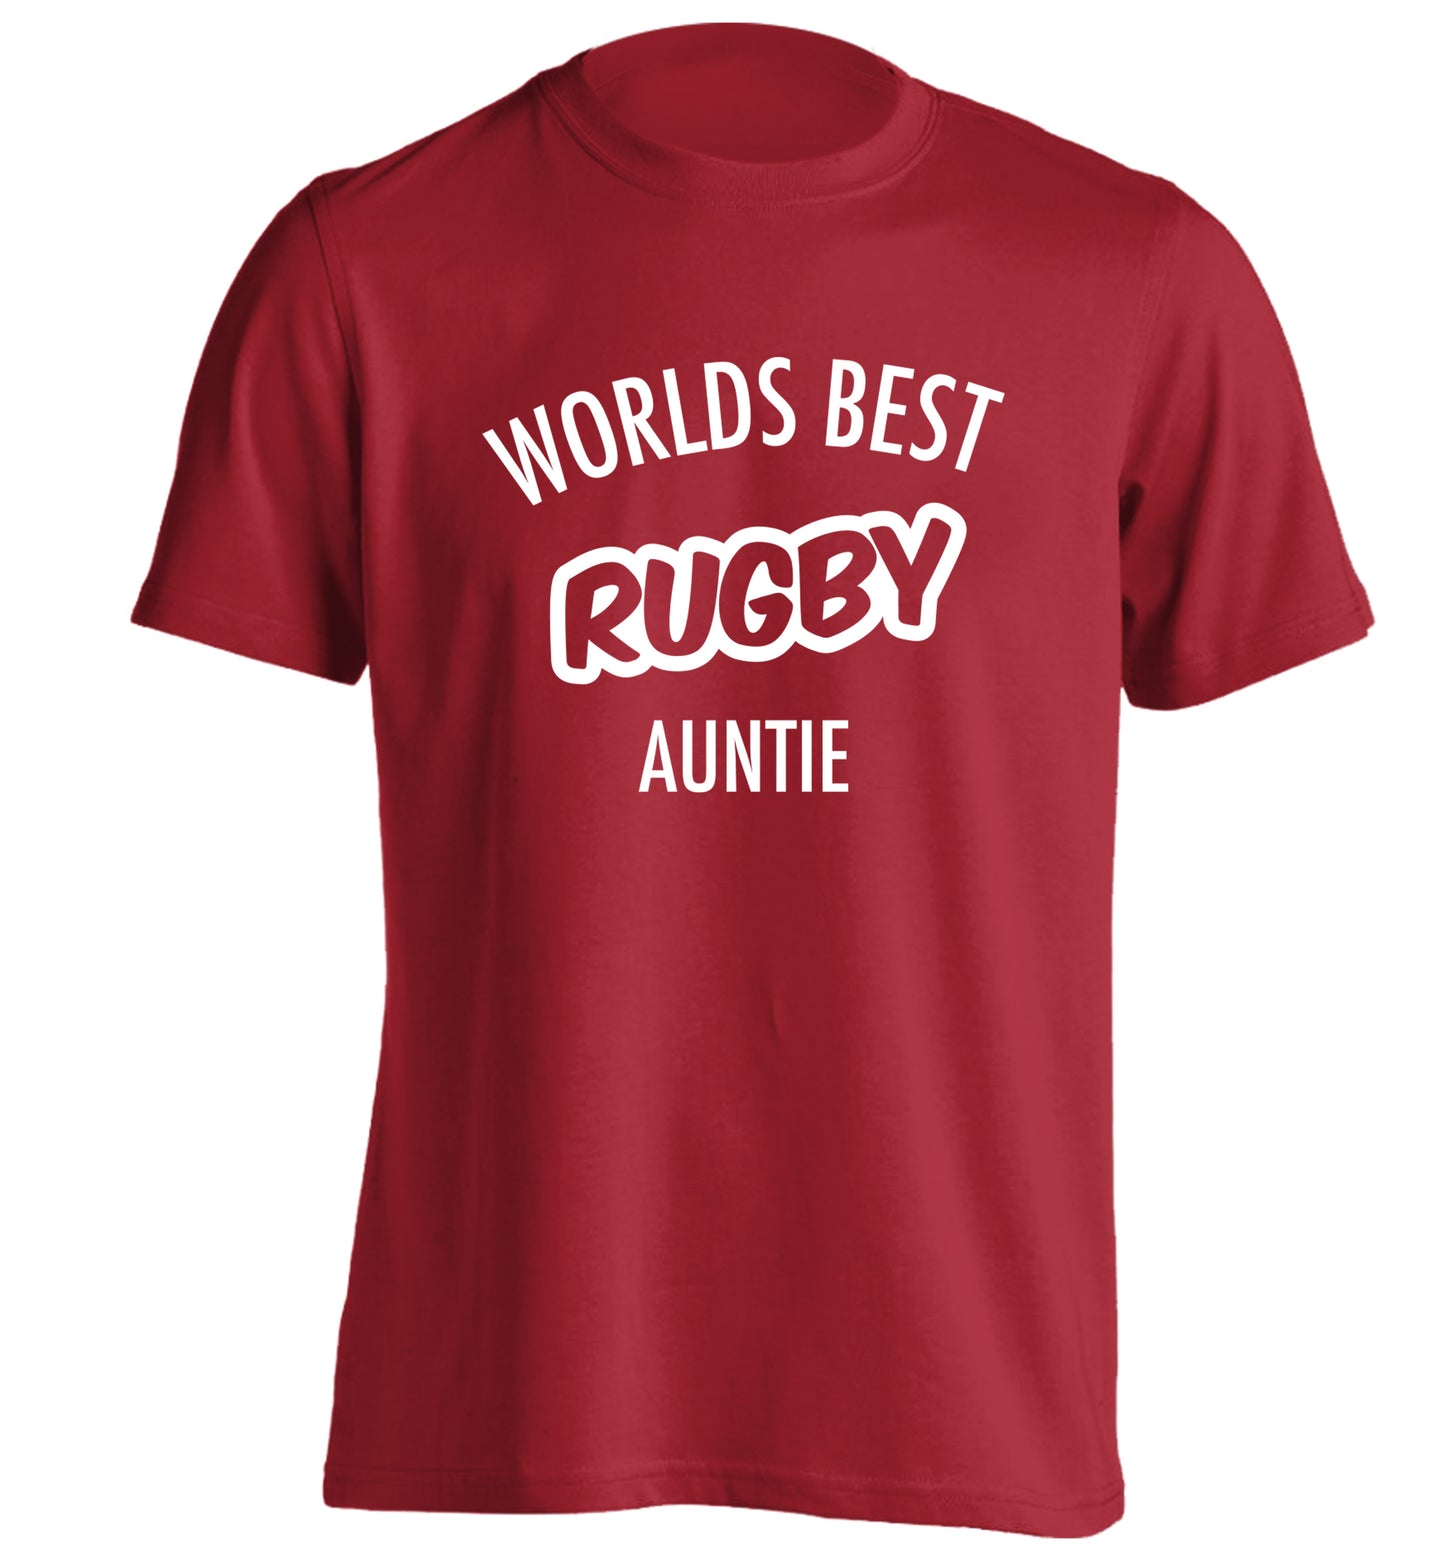 Worlds best rugby auntie adults unisex red Tshirt 2XL